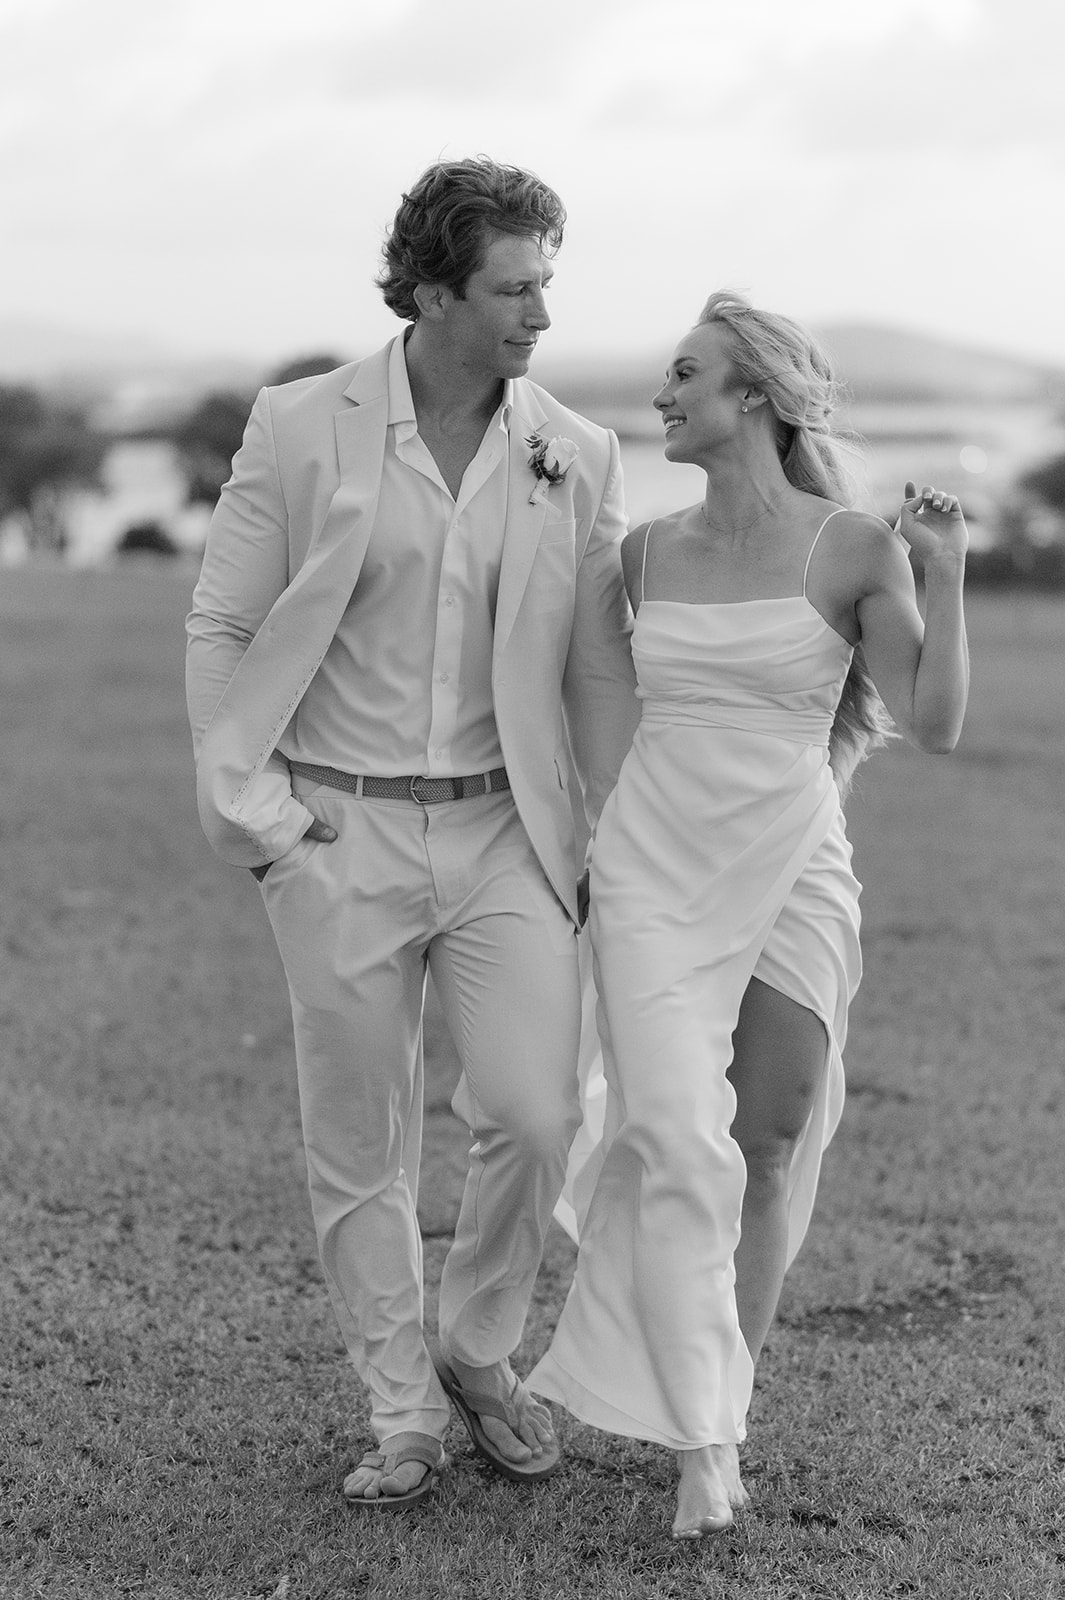 Luxury wedding photographer captures stunning black and white images
